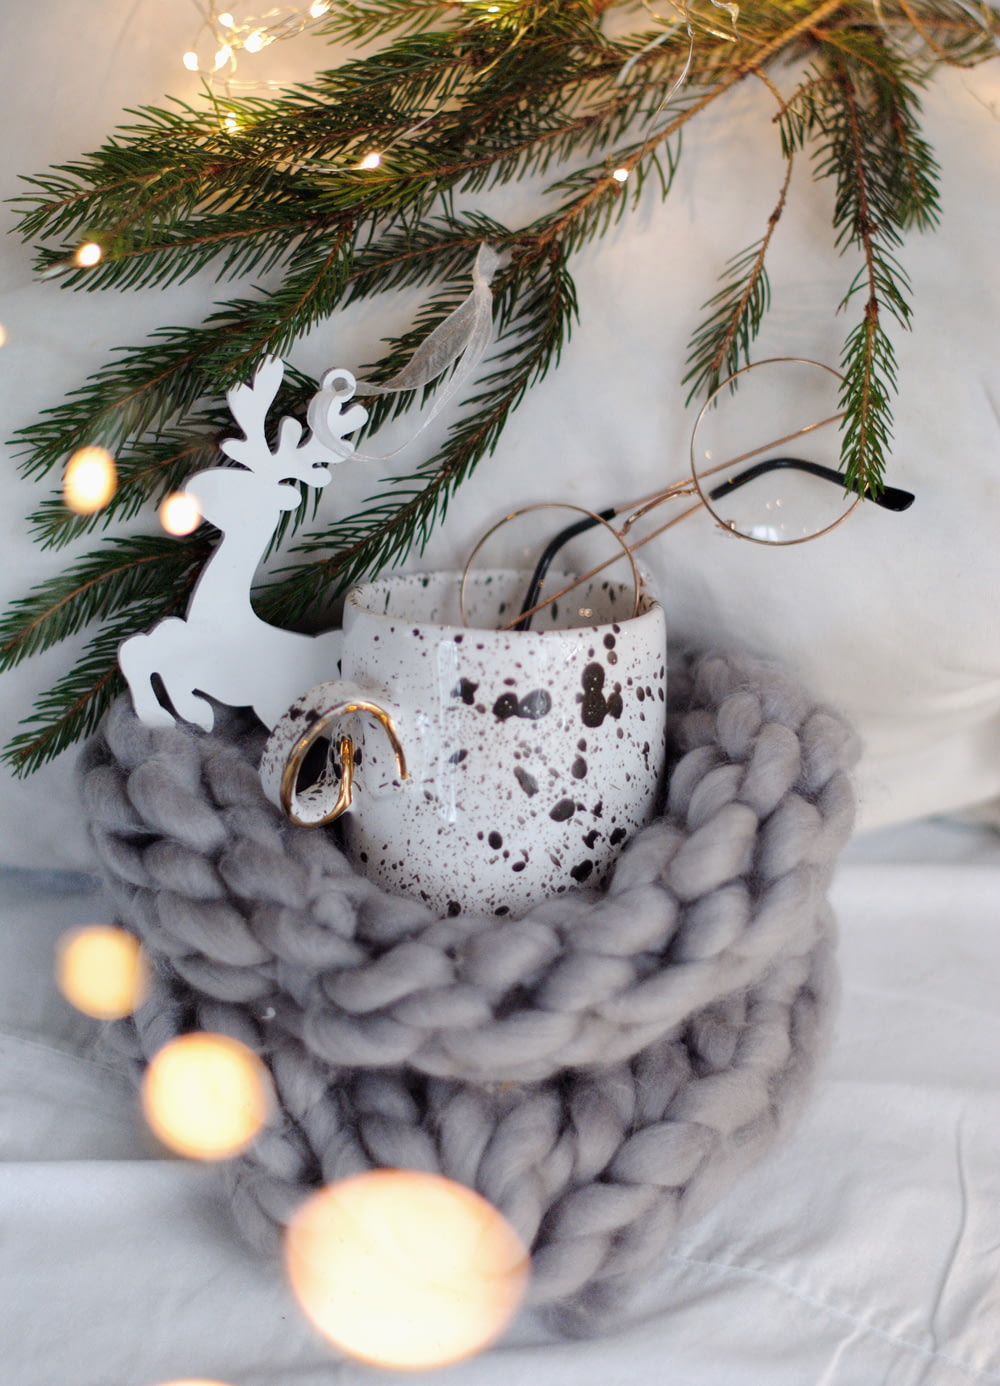 white reindeer decor near white and brown ceramic mug, eyeglasses, and green pine tree